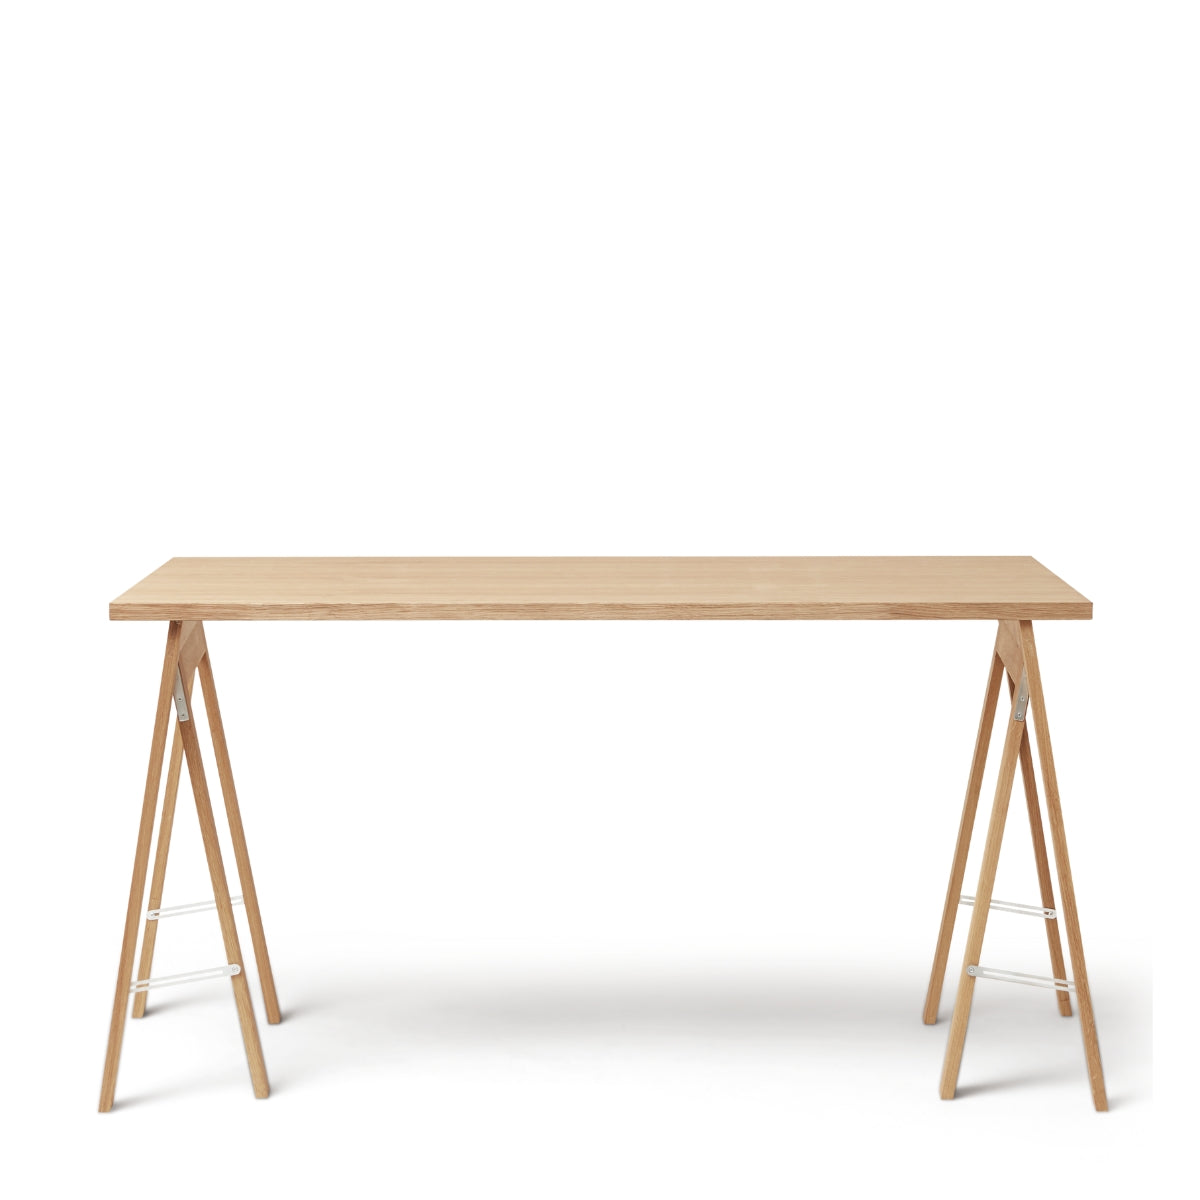 Form & Refine | Linear Tabletop - 125 x 68 cm